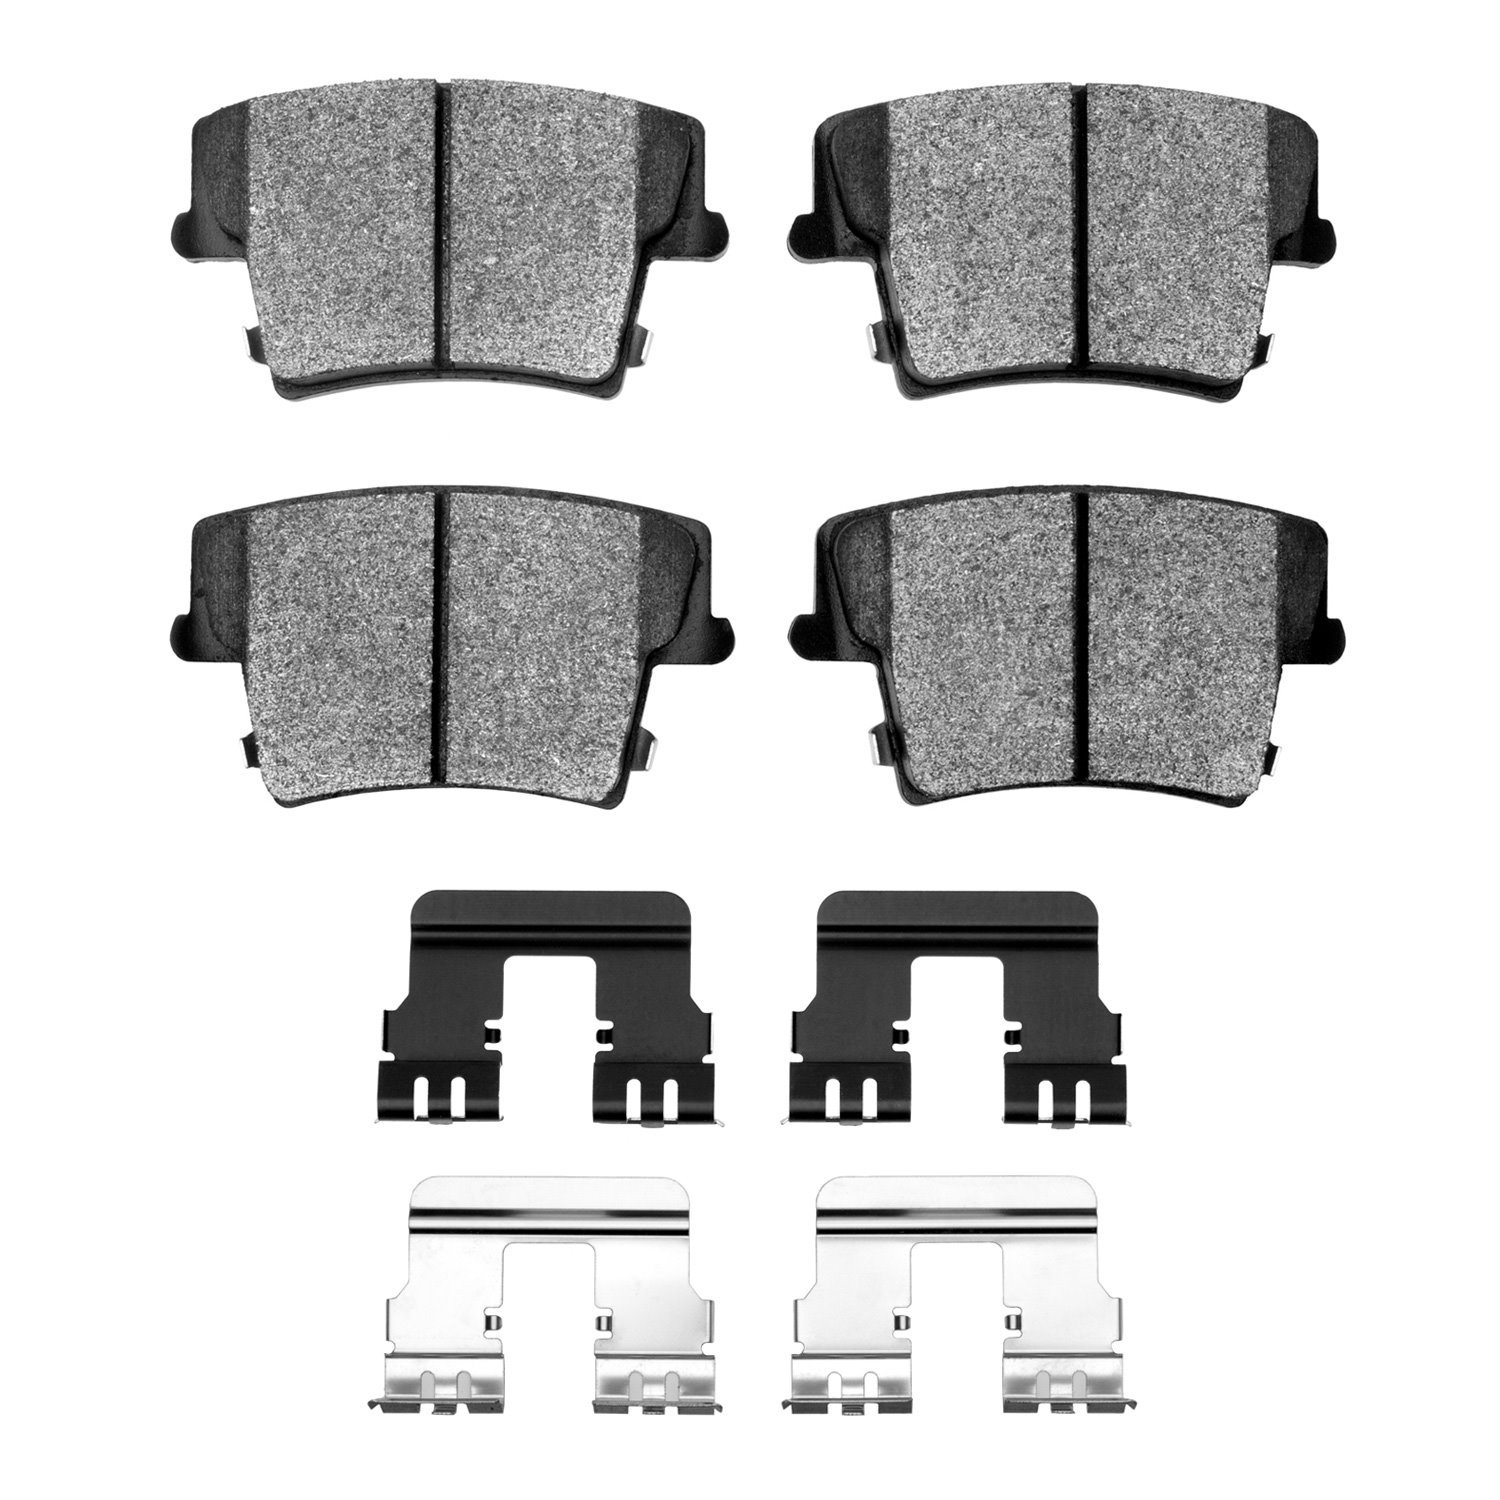 1551-1057-01 5000 Advanced Ceramic Brake Pads & Hardware Kit, Fits Select Mopar, Position: Rear